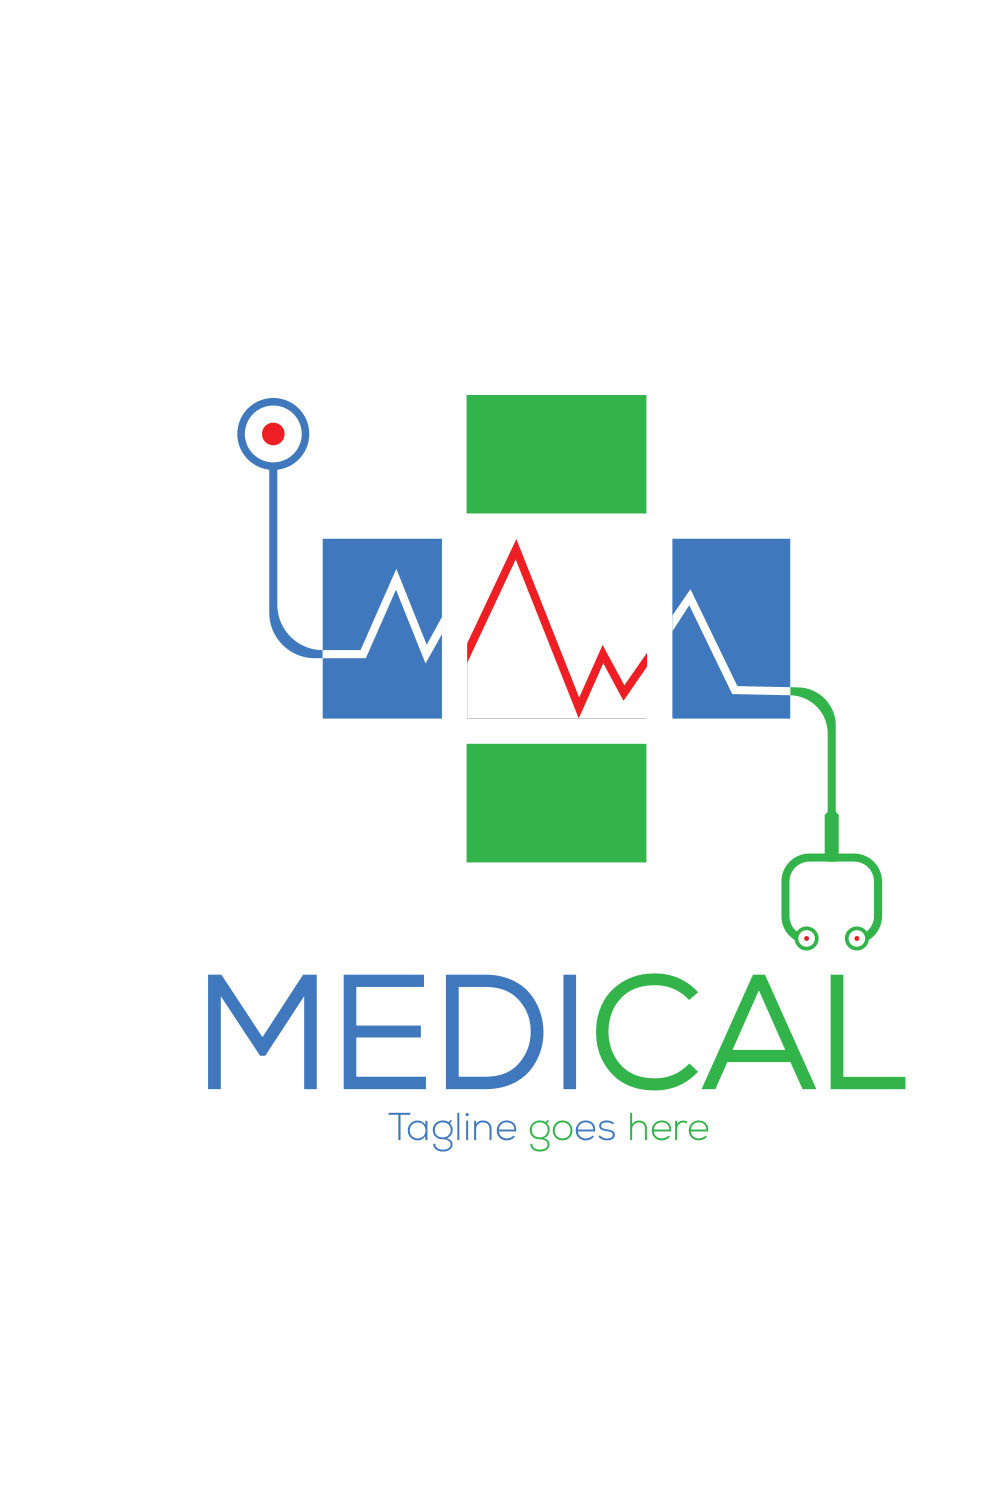 Creative and Unique Medical Logo Design Pinterest image.